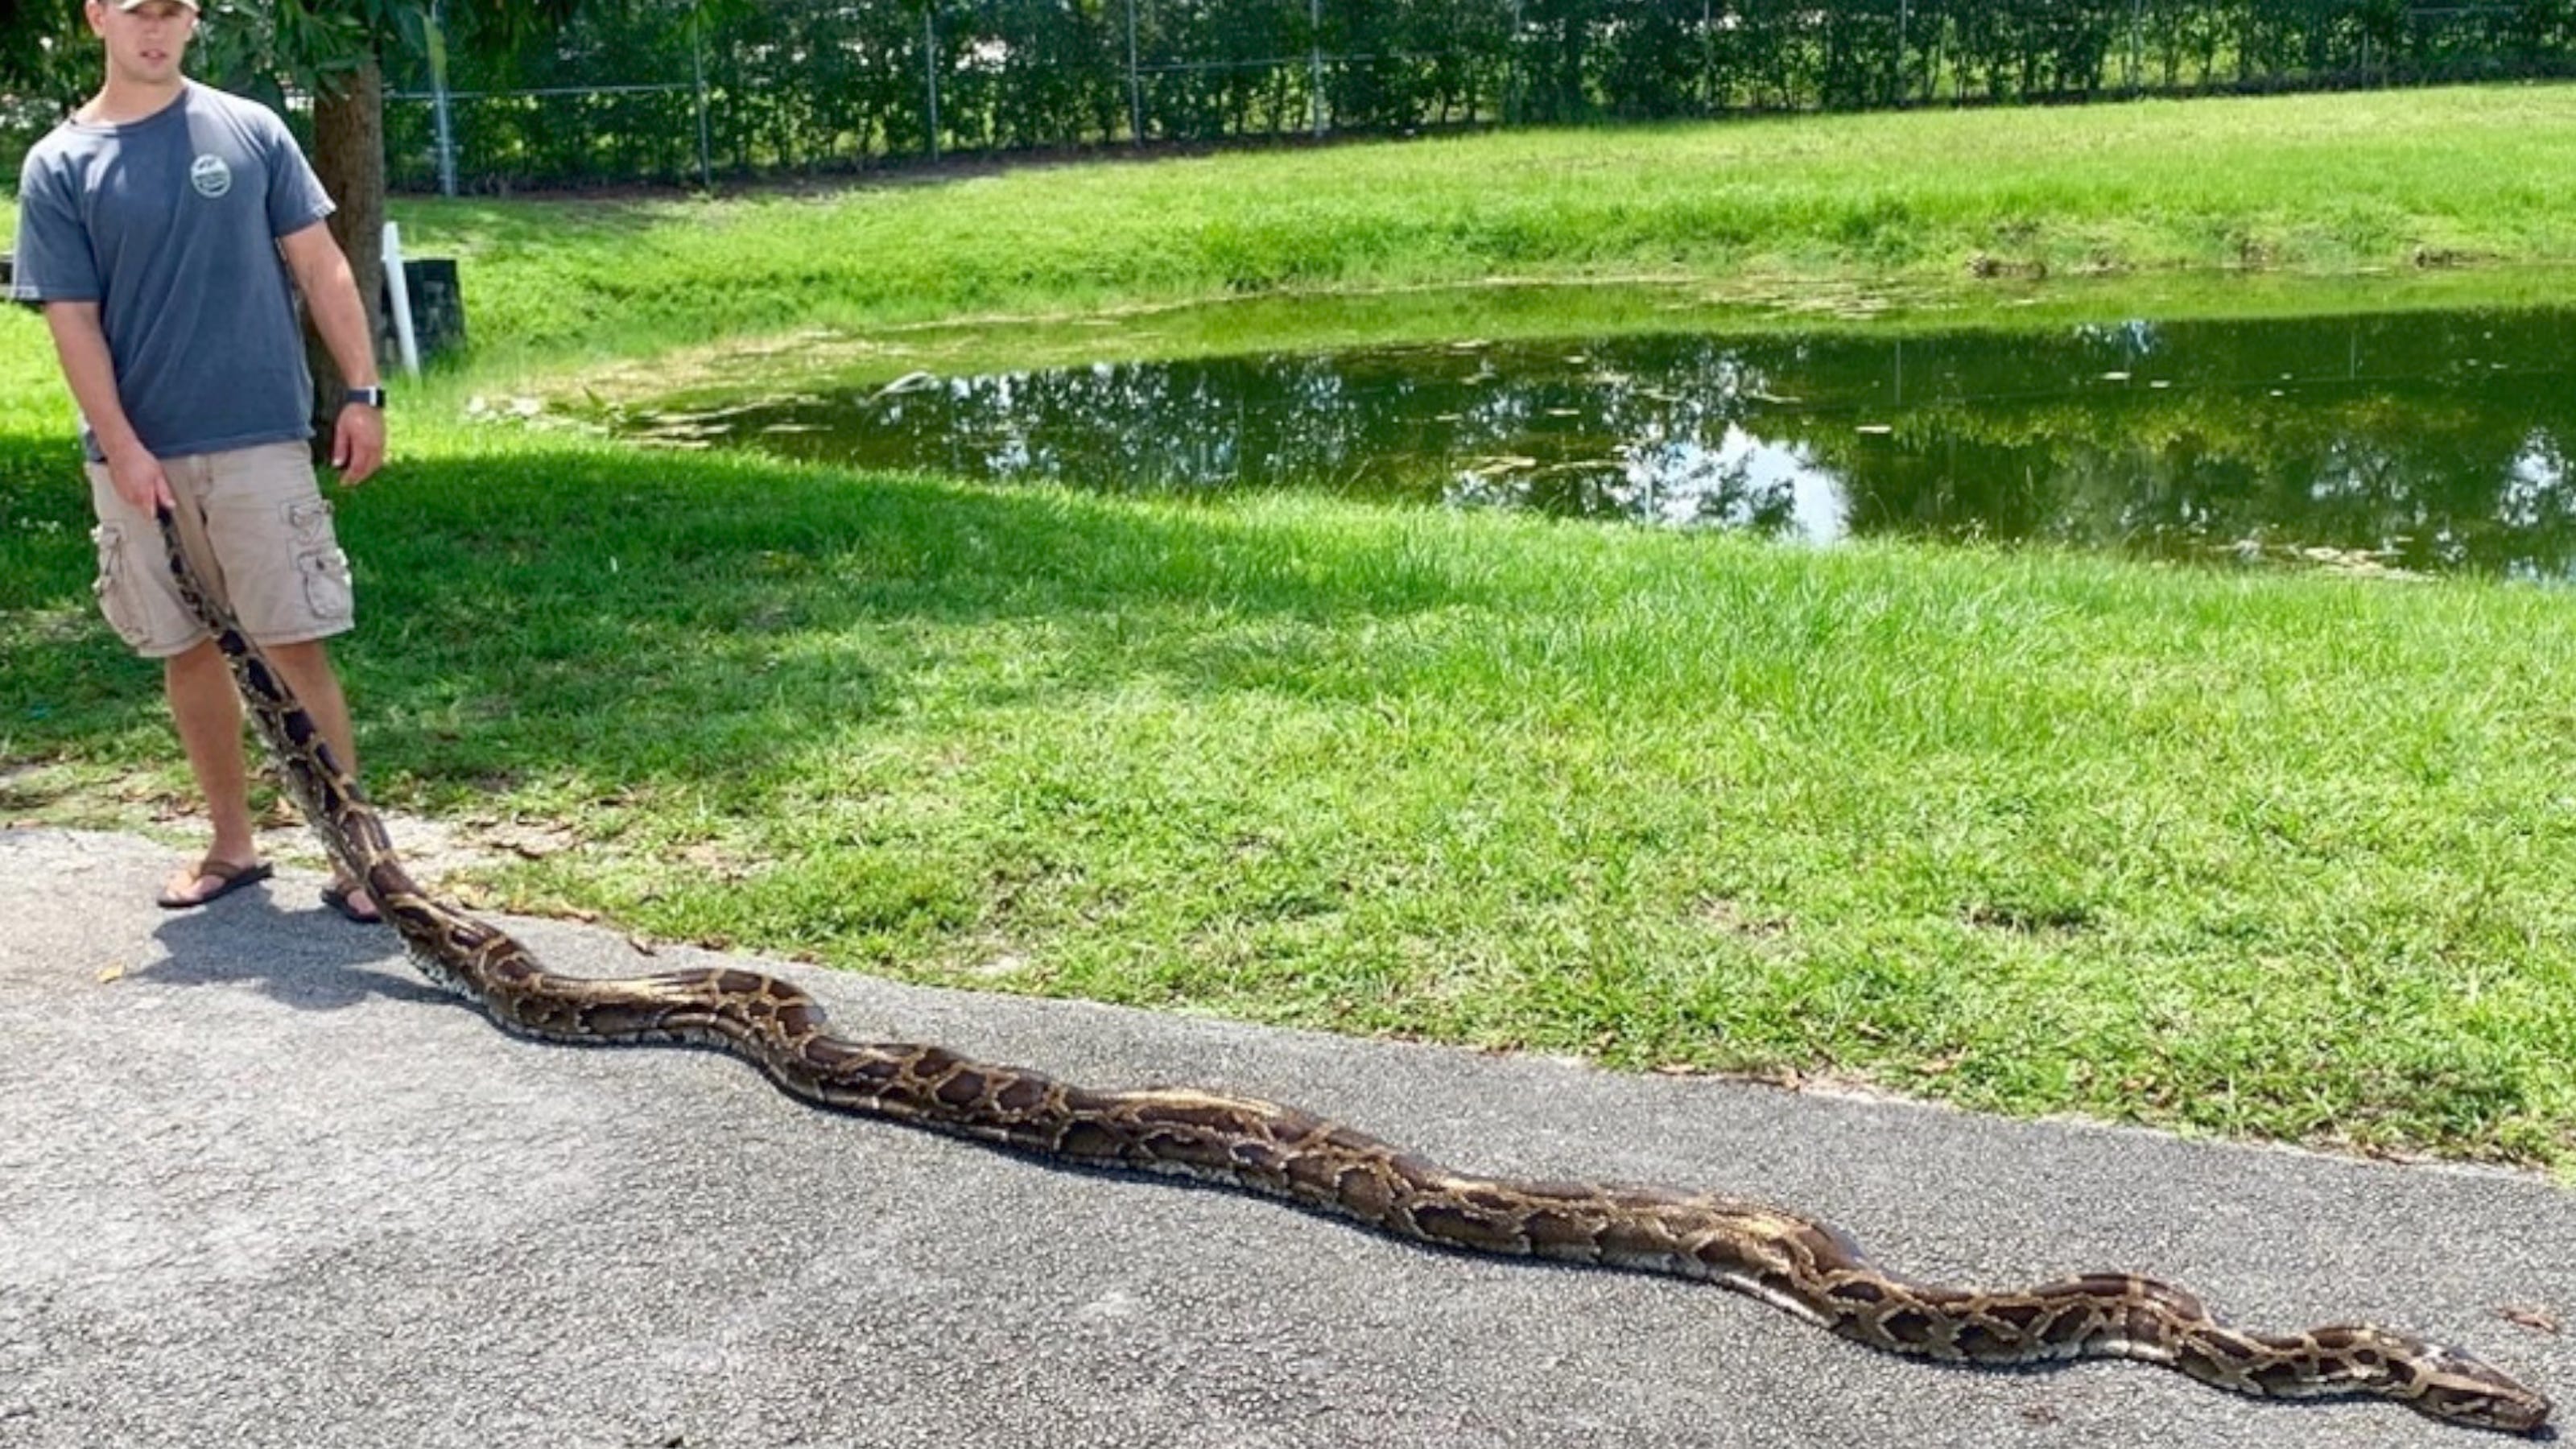 18 Foot Burmese Python Captured In Florida